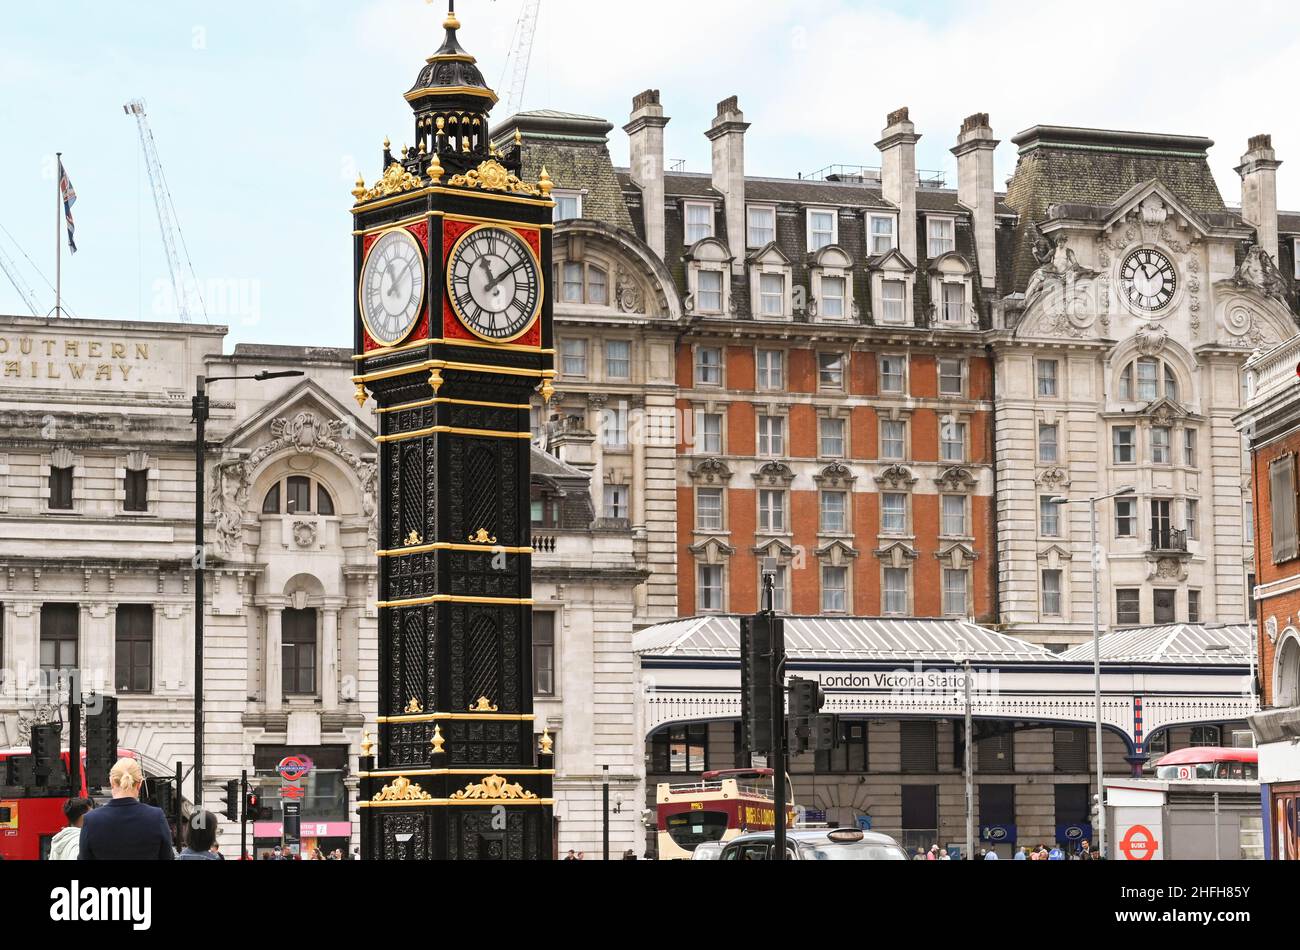 London, England - June 2020: Ornate clock tower outside London Victoria railway station Stock Photo